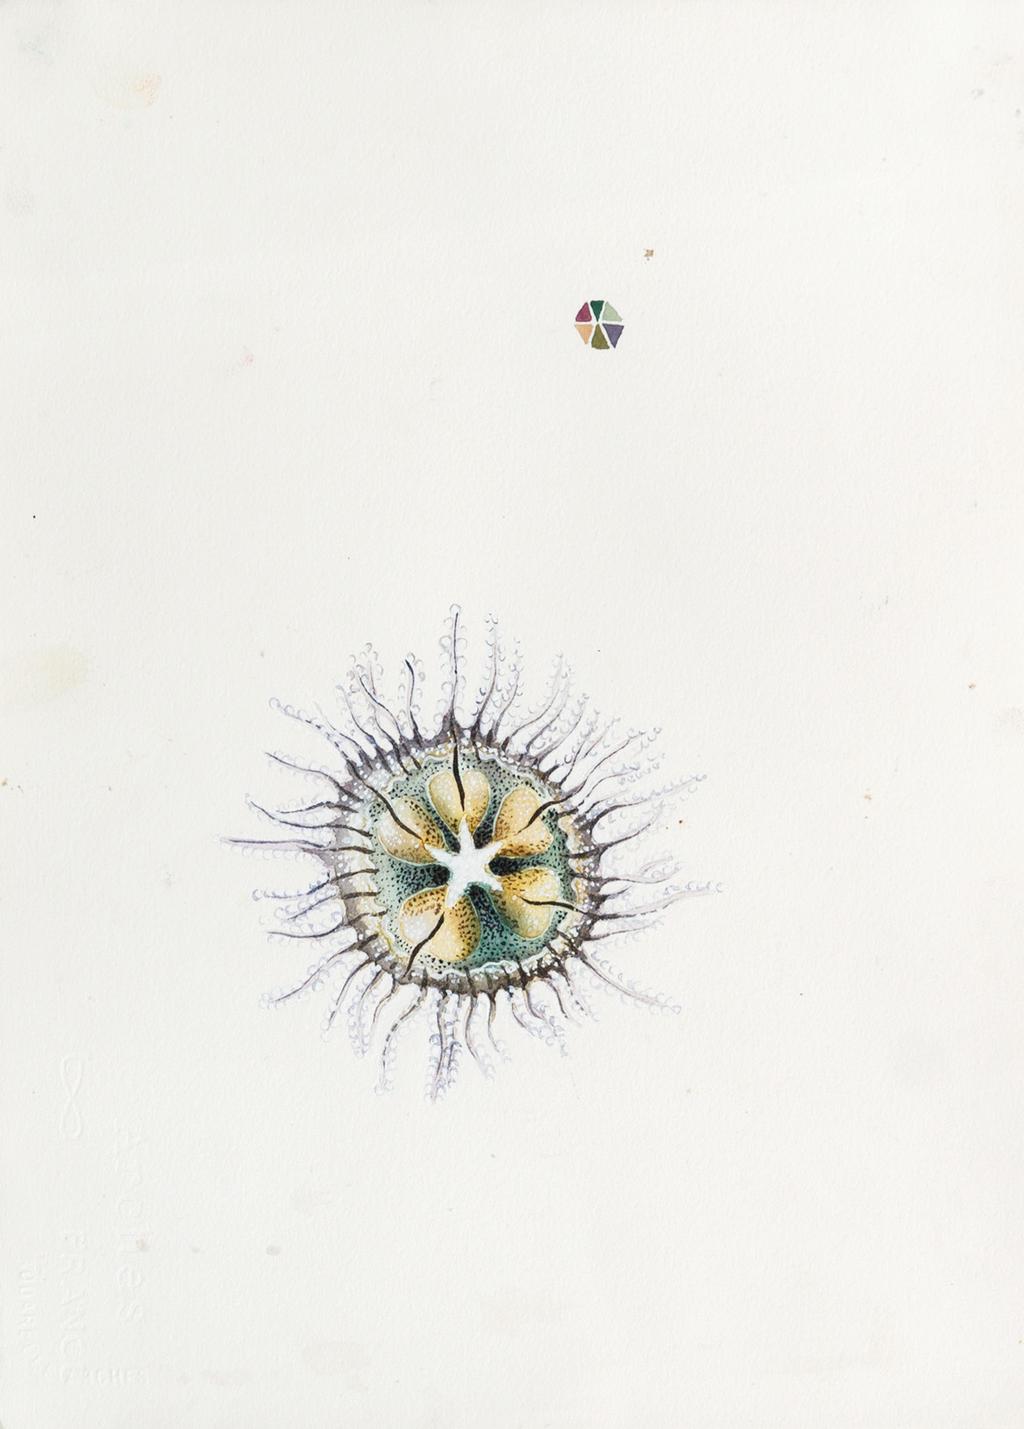 Underside of jellyfish watercolour on